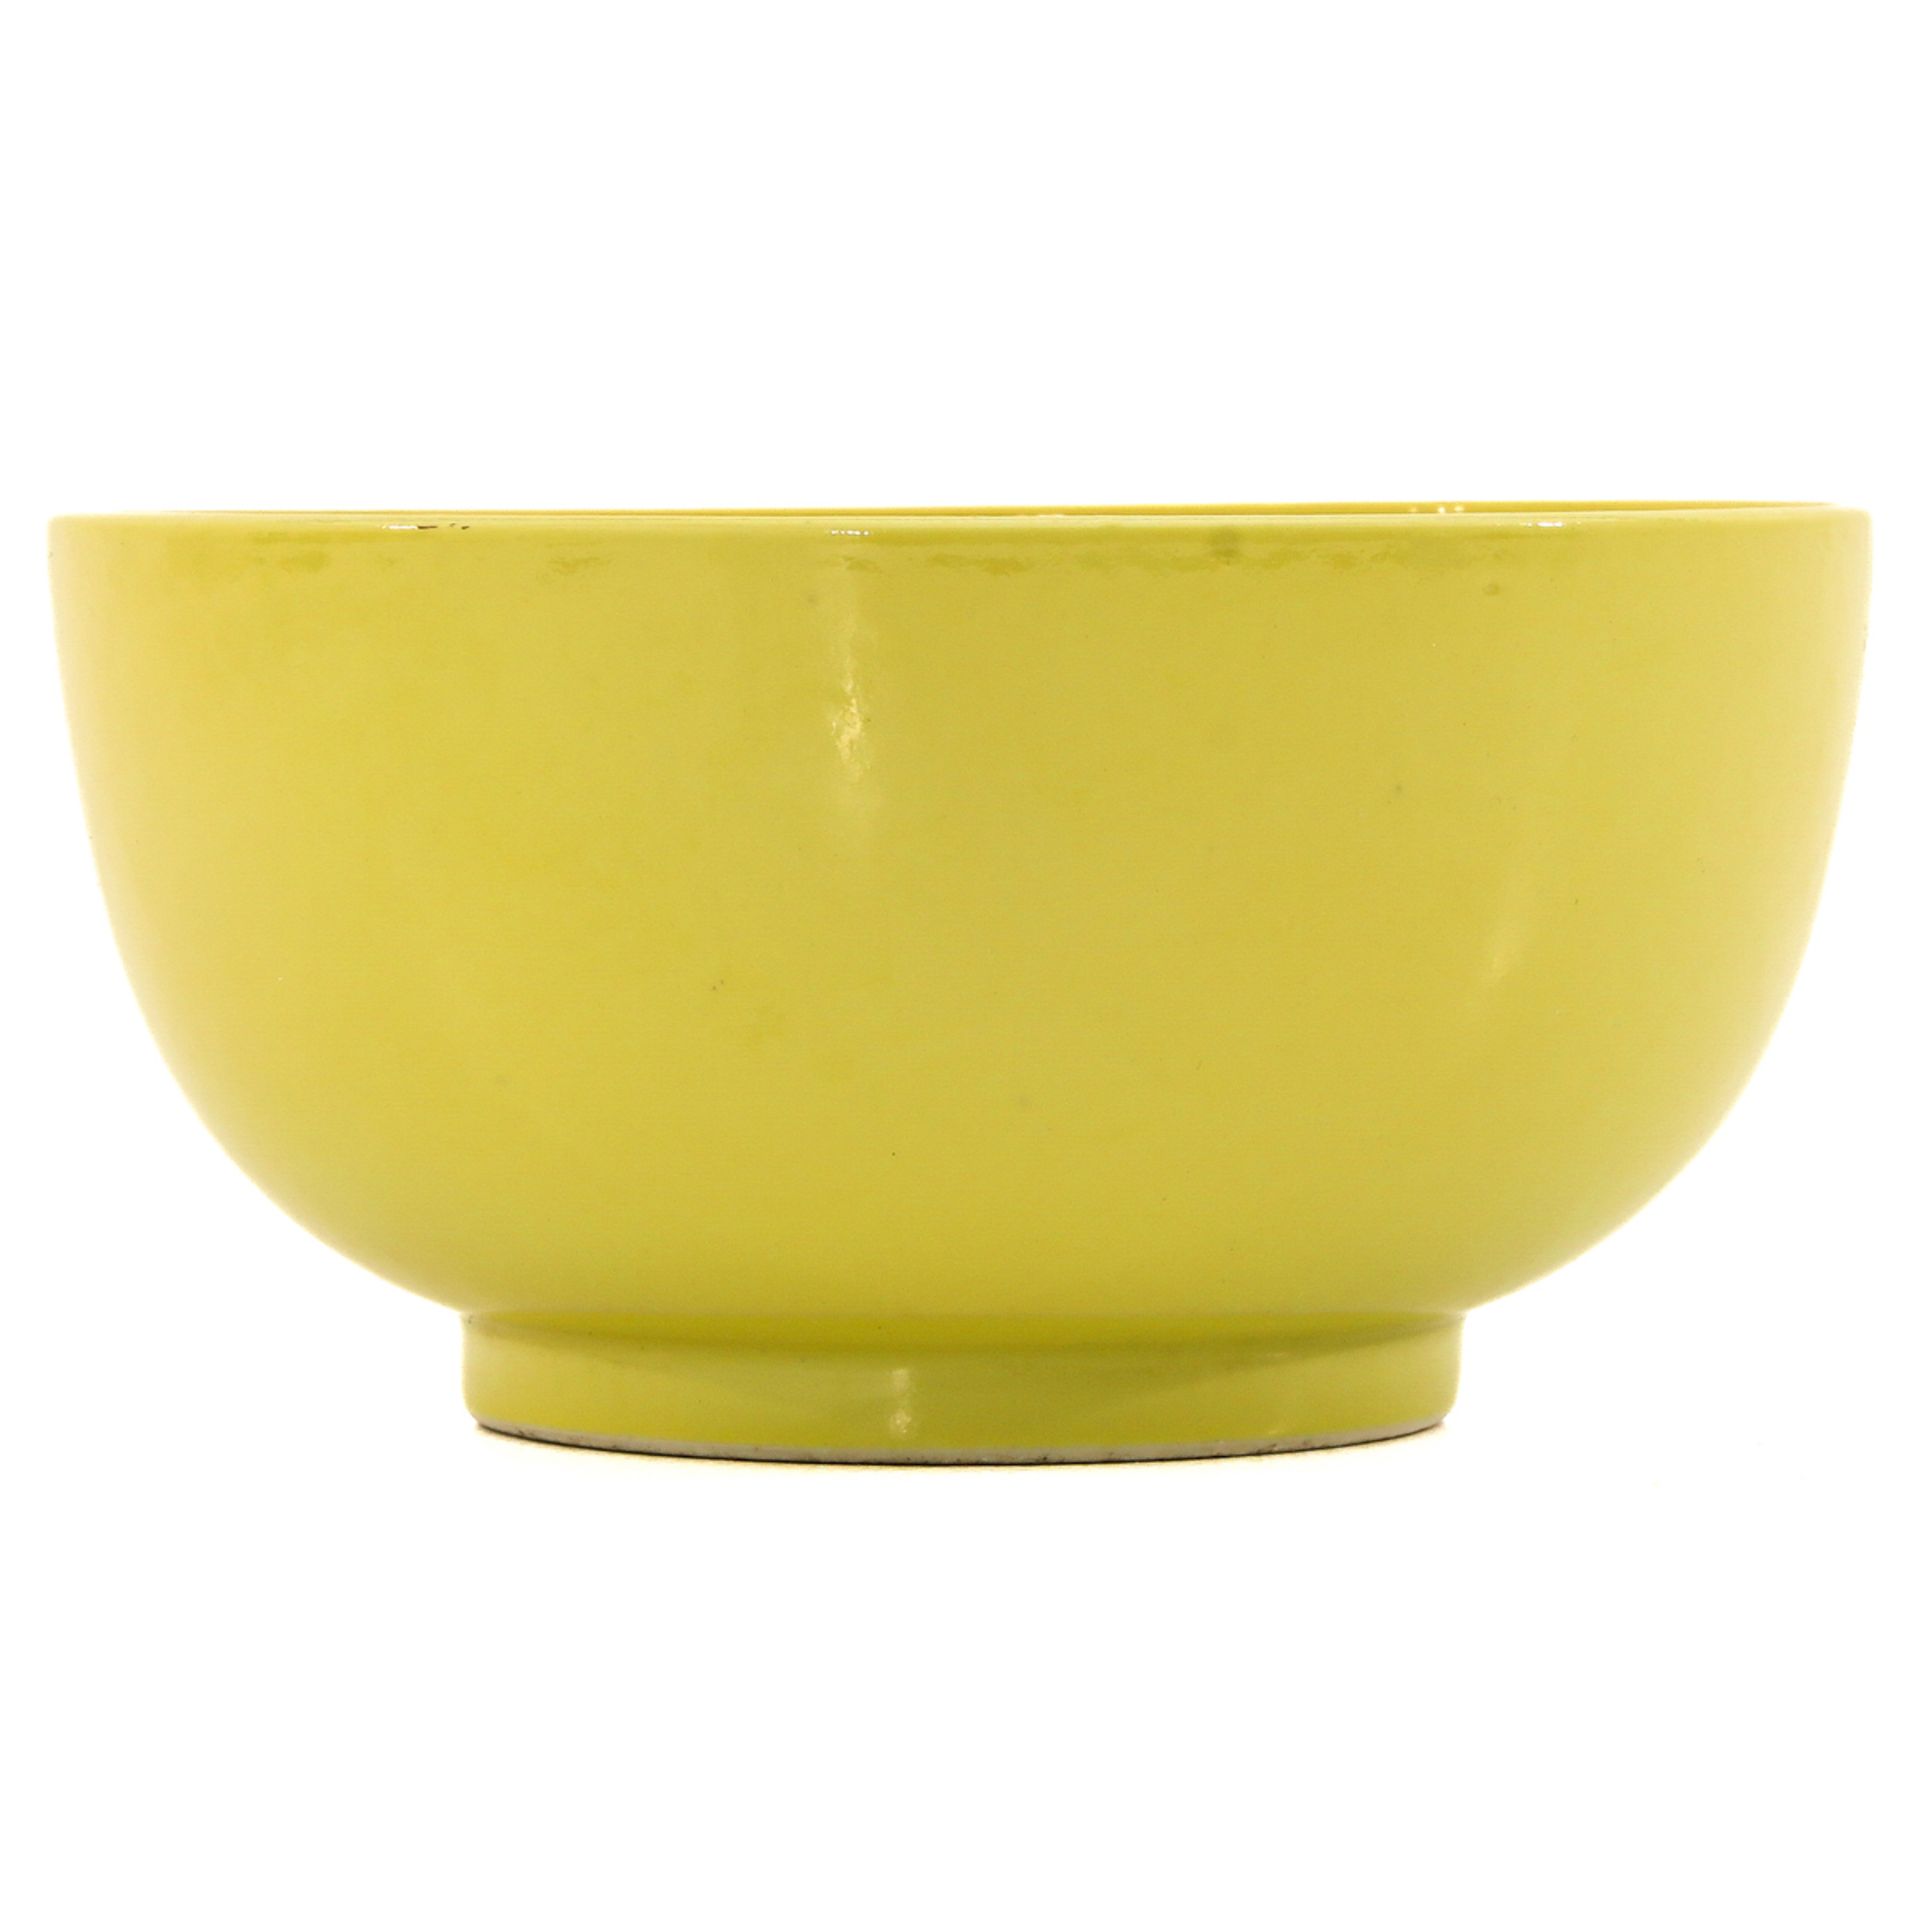 A Yellow Glaze Bowl - Image 4 of 9